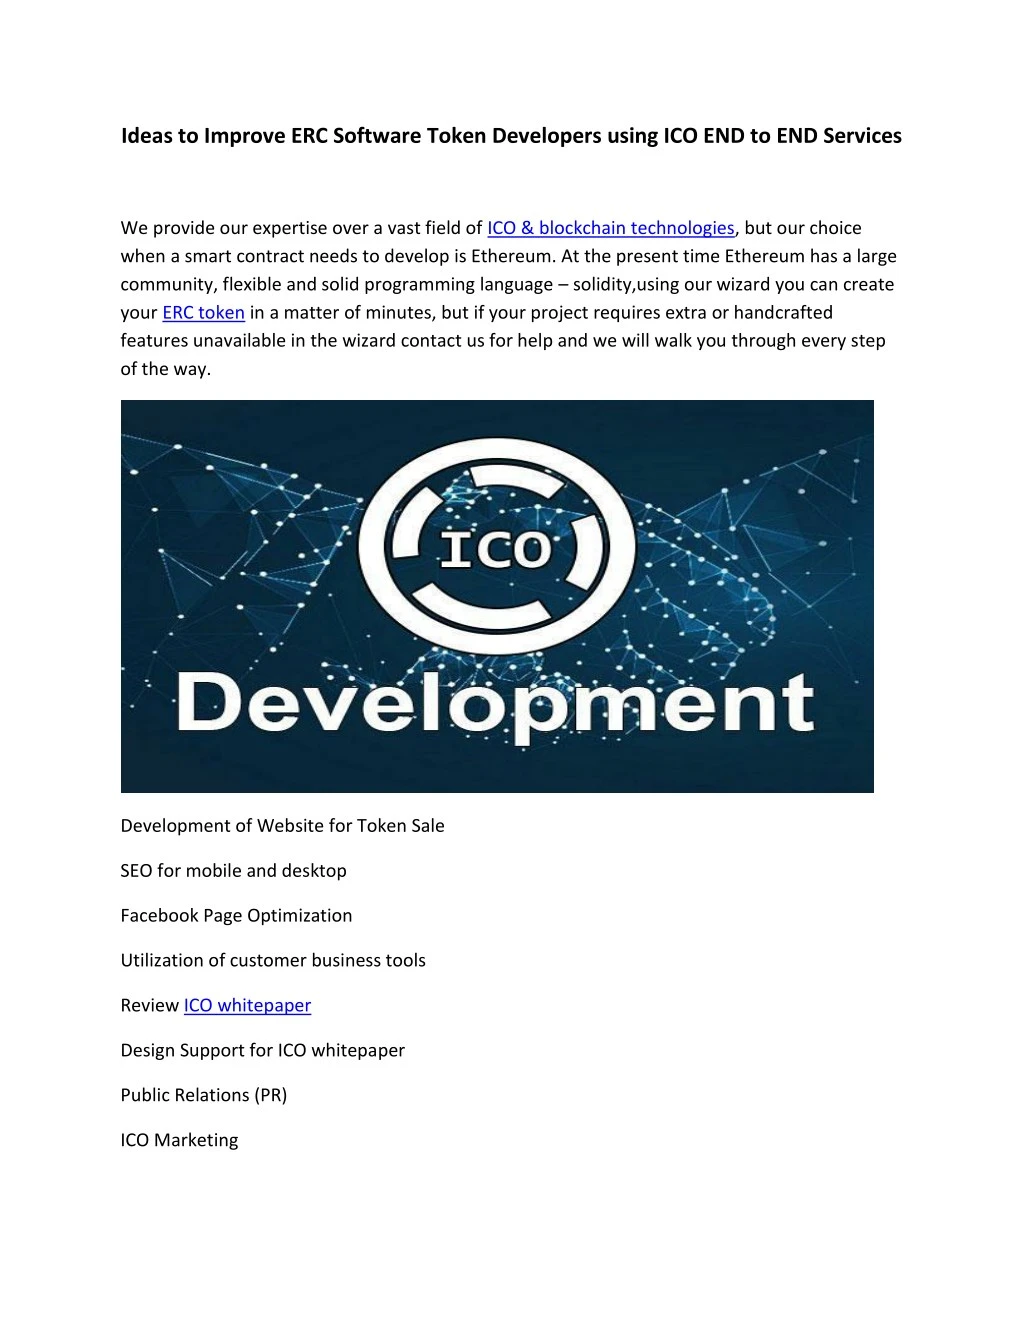 ideas to improve erc software token developers